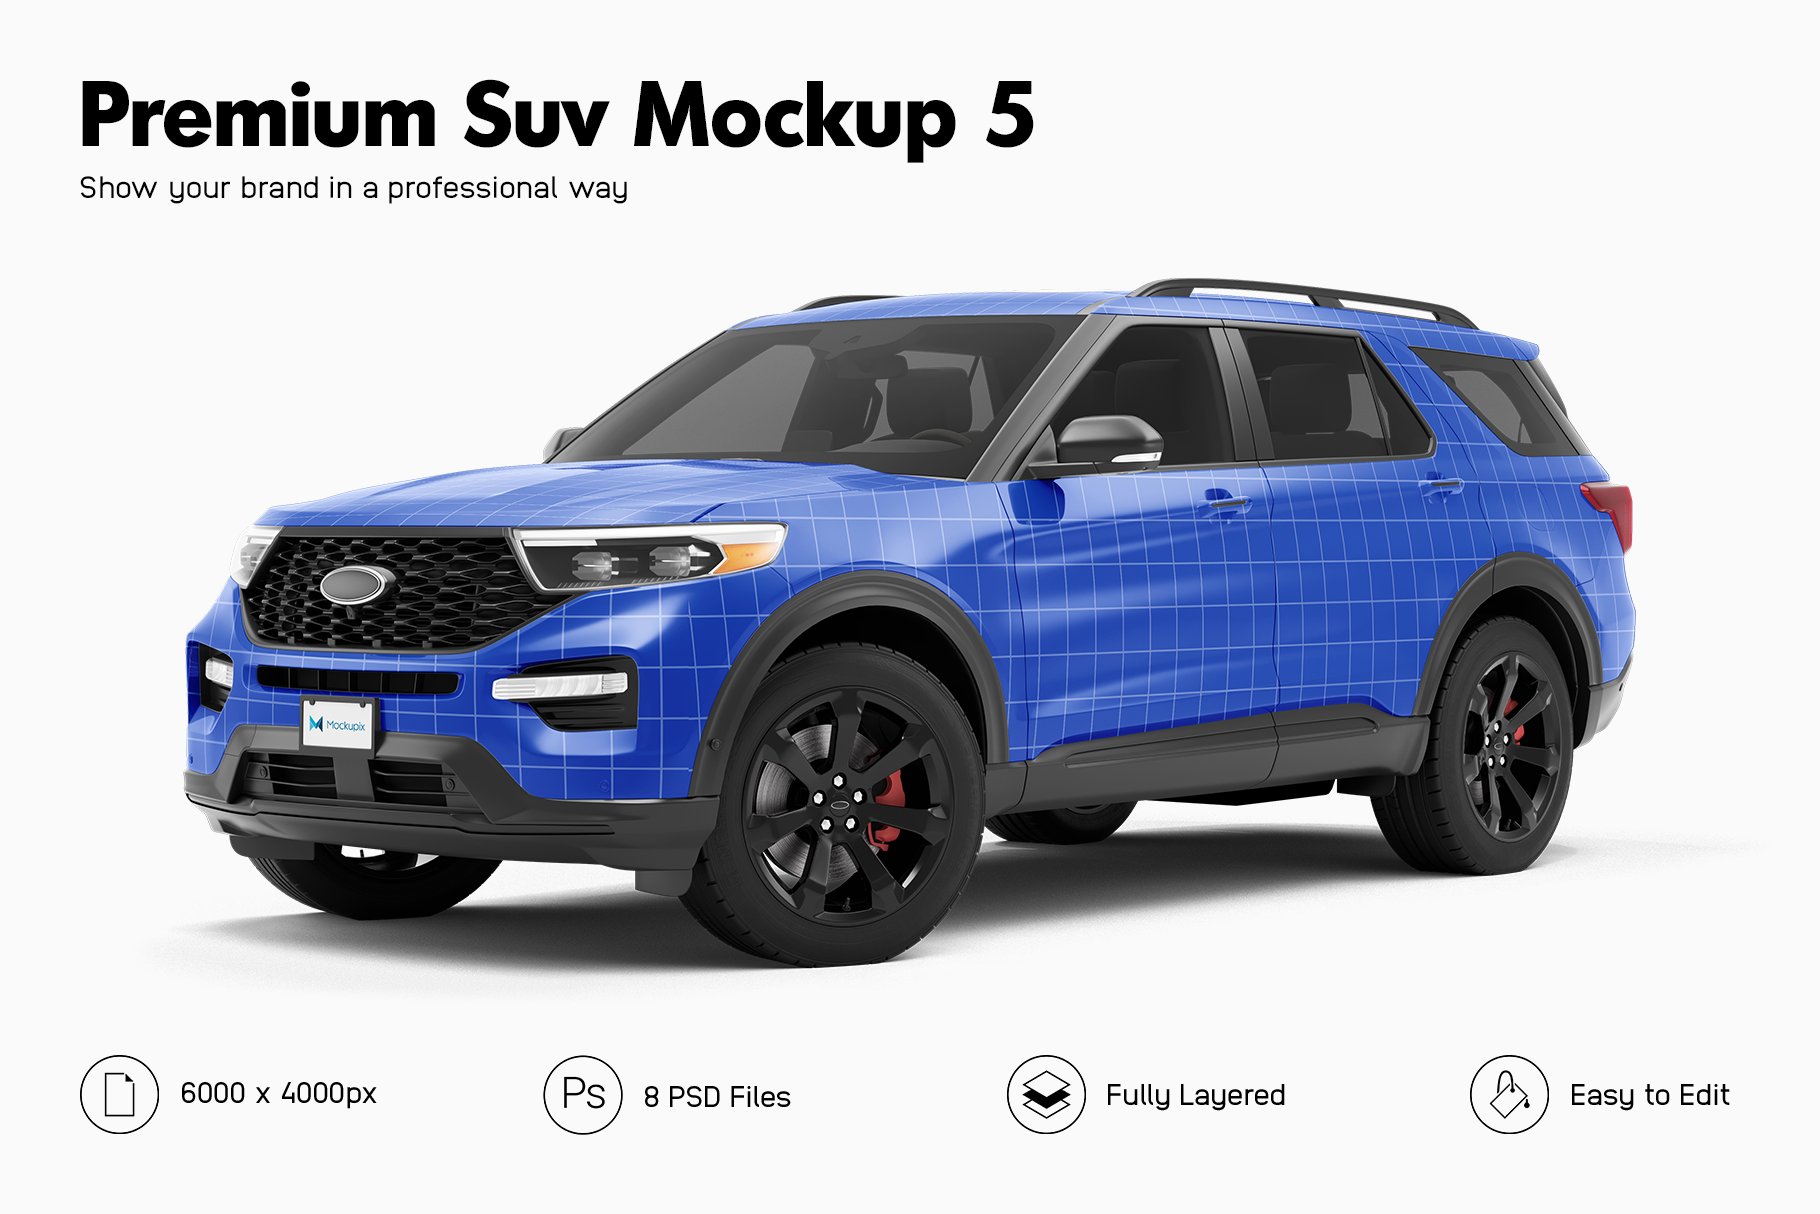 Premium SUV Mockup 5 cover image.